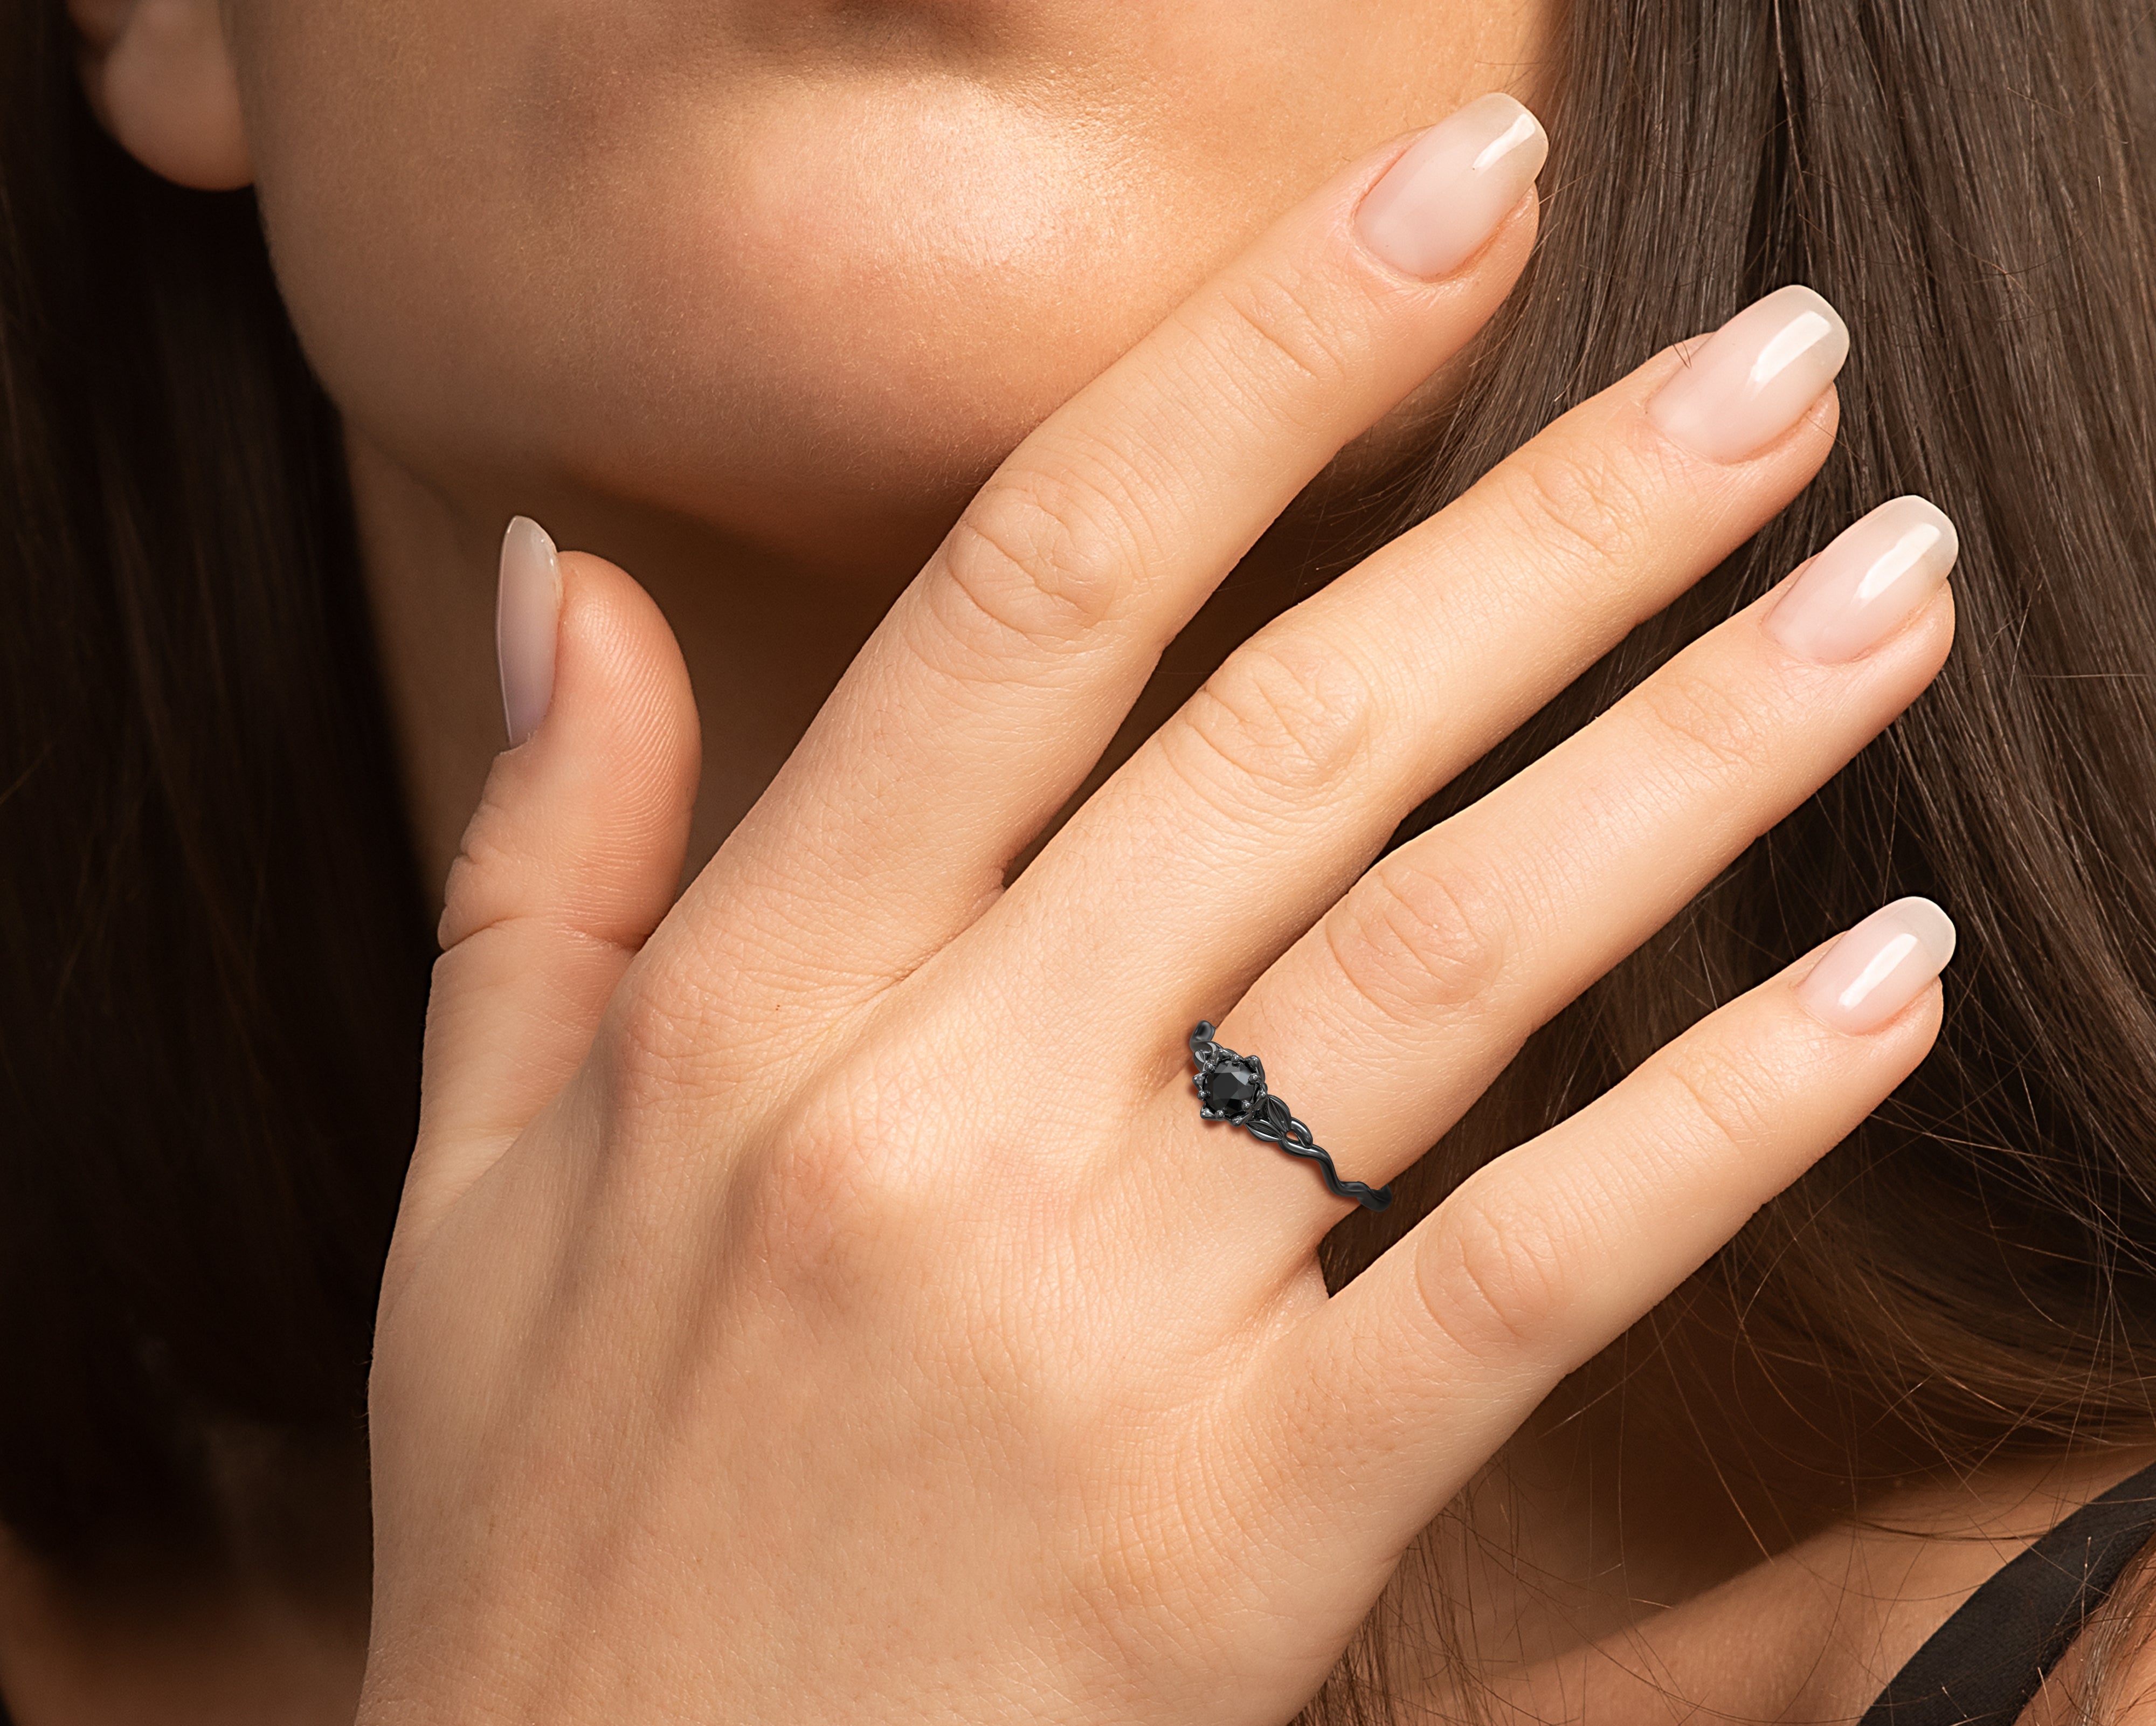 Shop Black Diamond Engagement Rings | Unique Expression of Love!